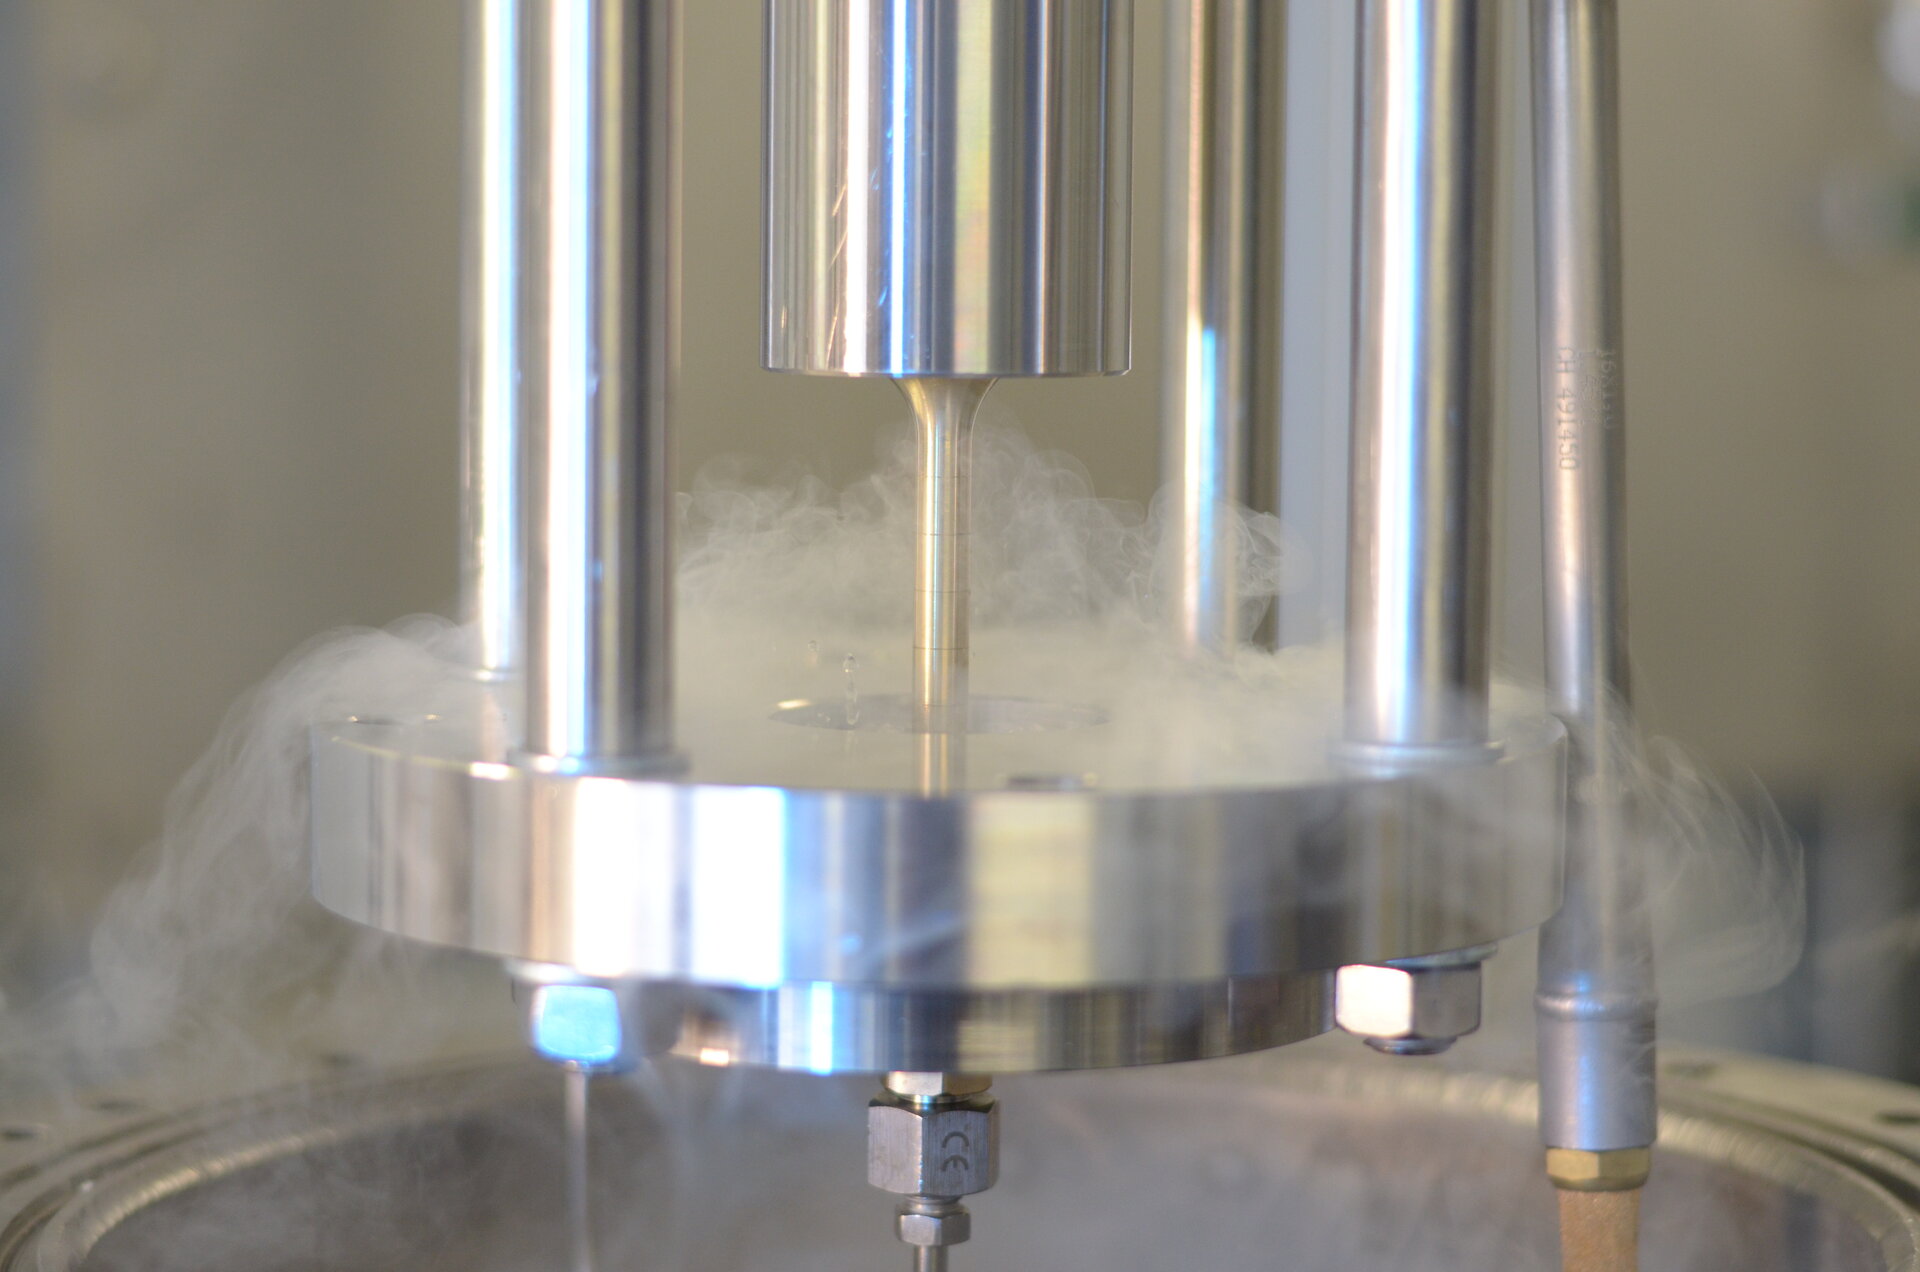 Cryogenic testing sample and sample holder